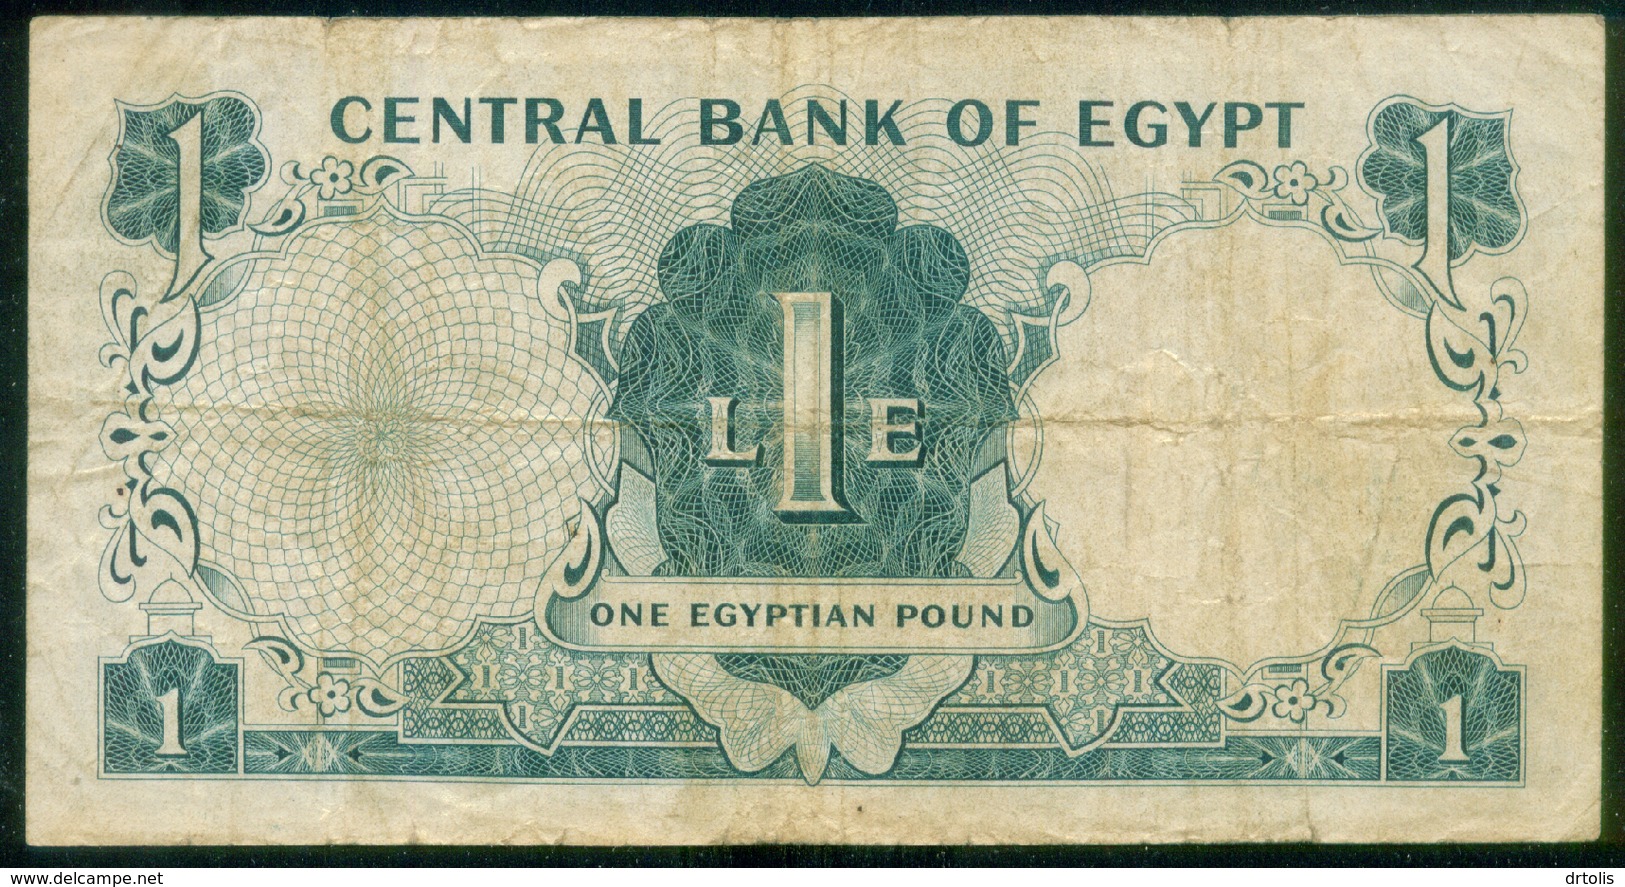 EGYPT / ONE POUND / DATE : 21-2-1967 / P-37a(3) / PREFIX : T95 / TUTANKHAMEN / USED. - Egitto